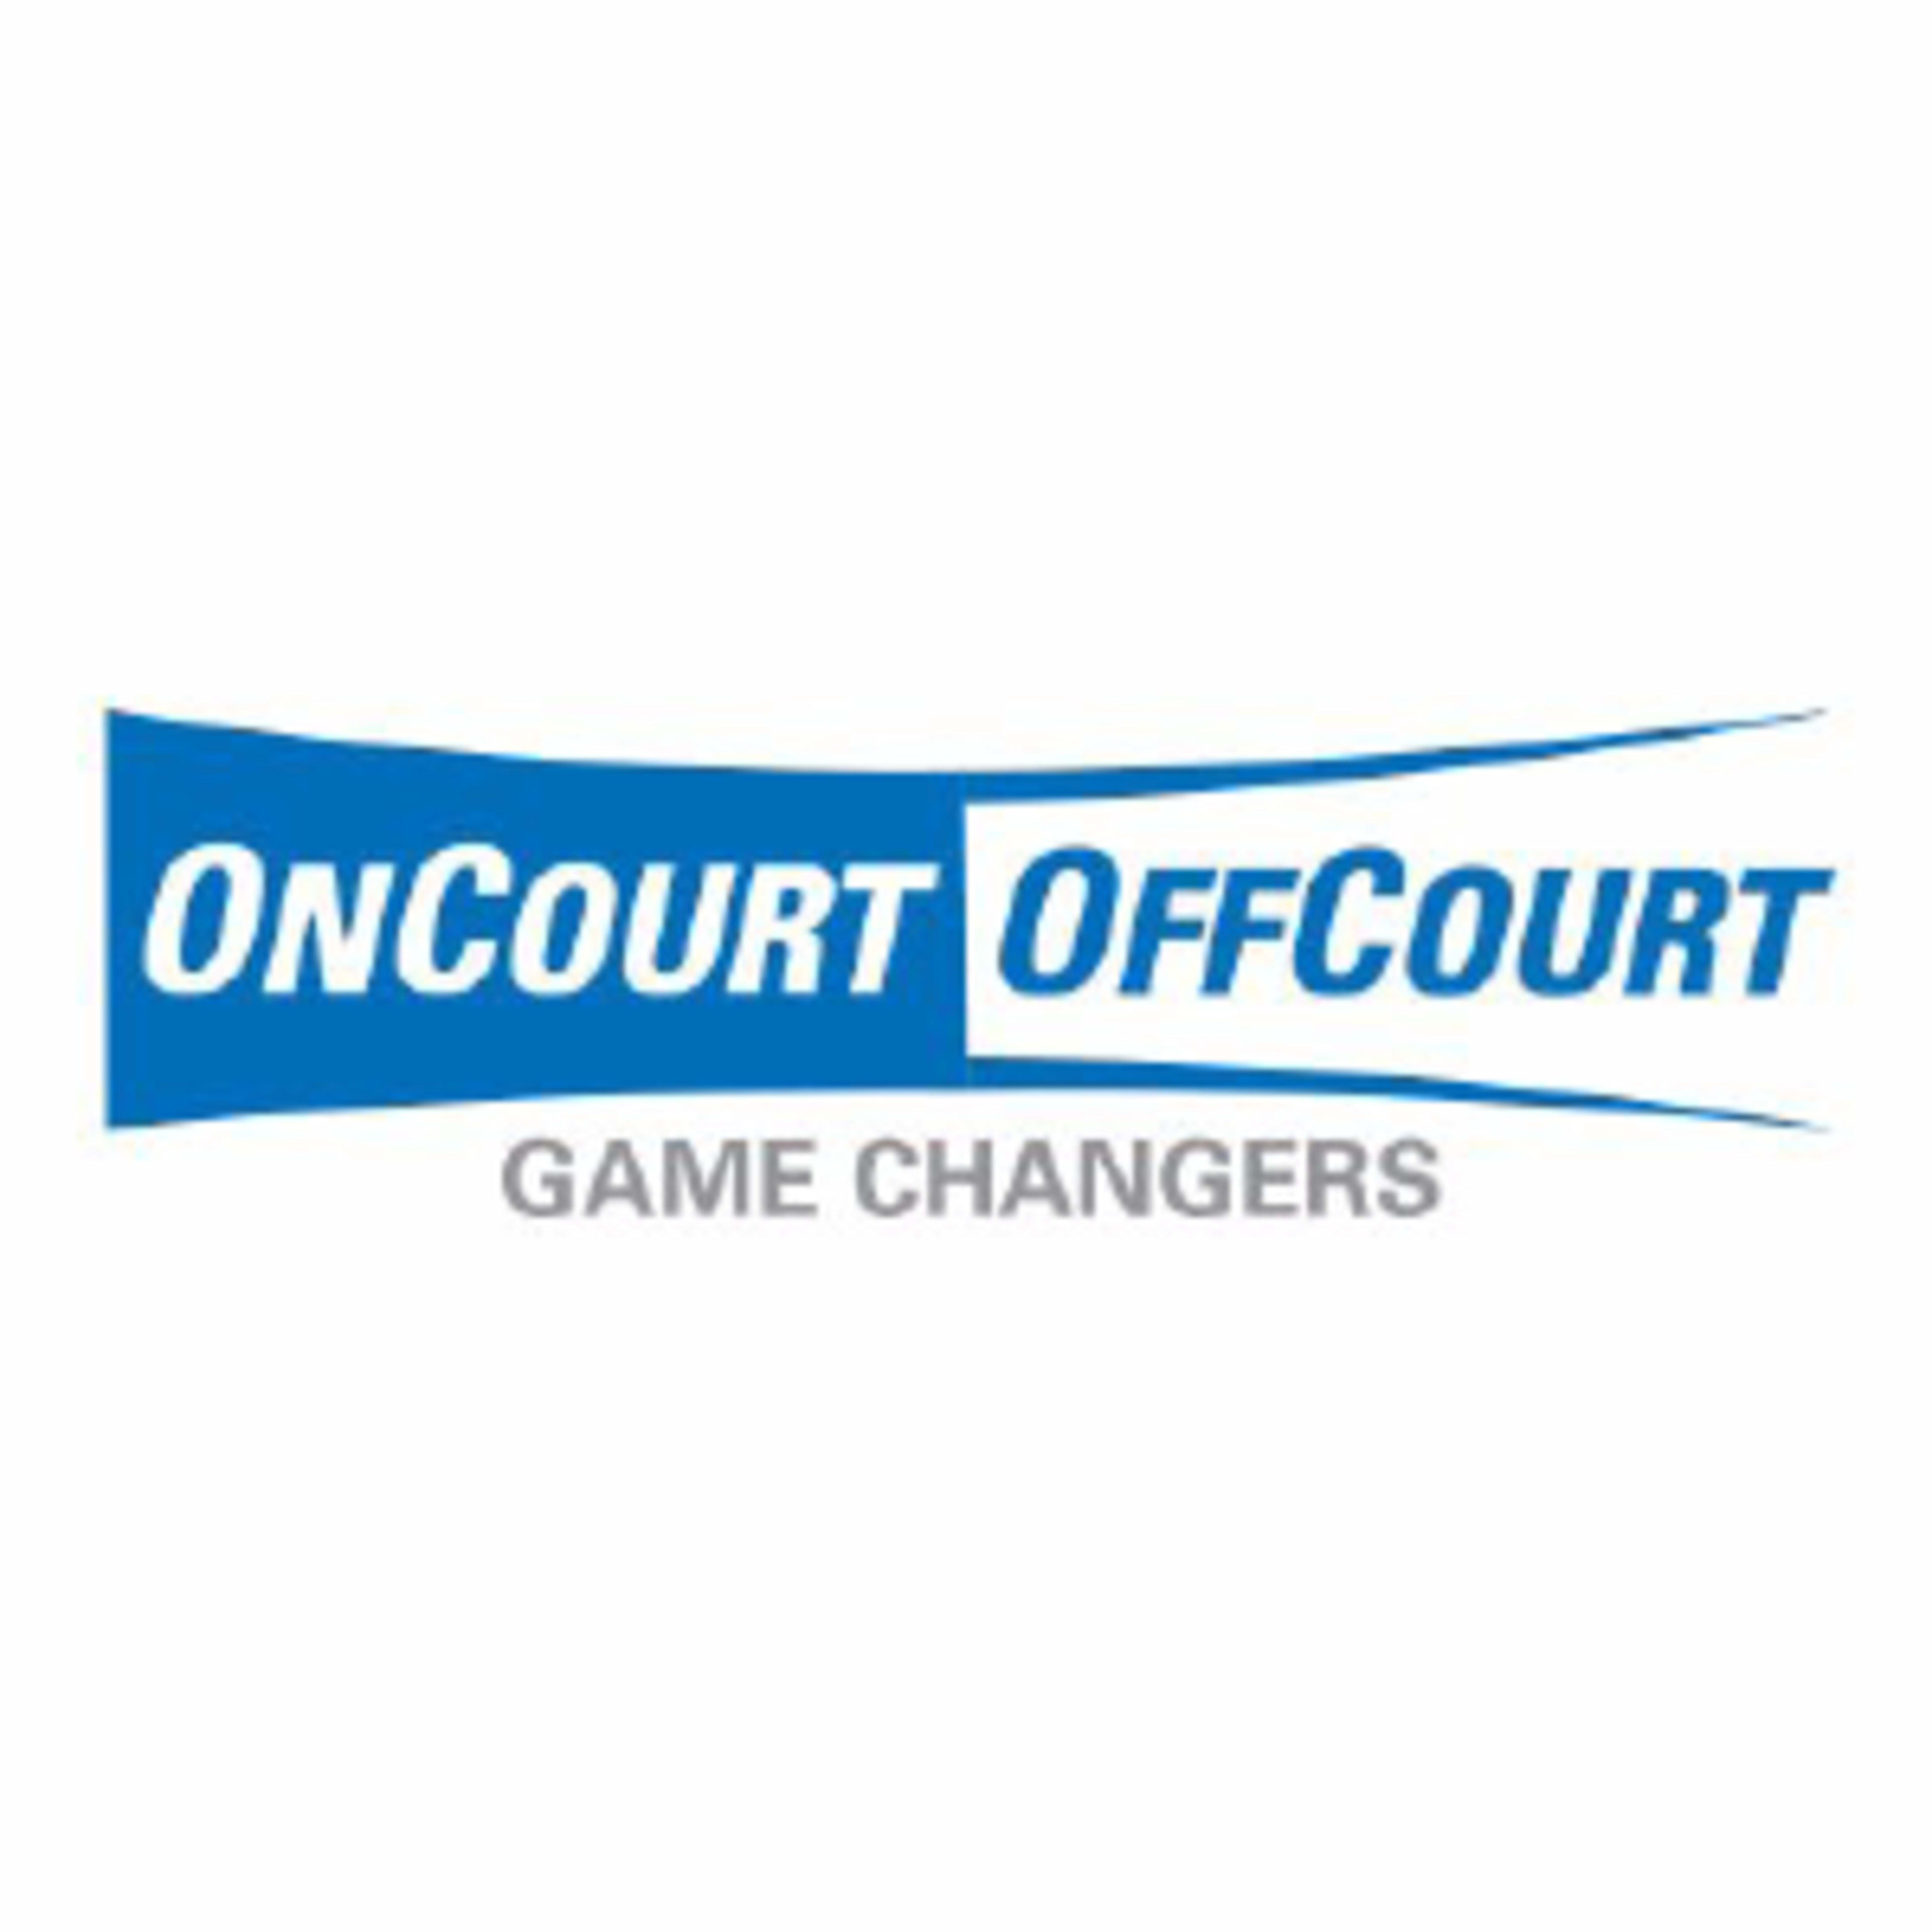 OnCourt OffCourt Code